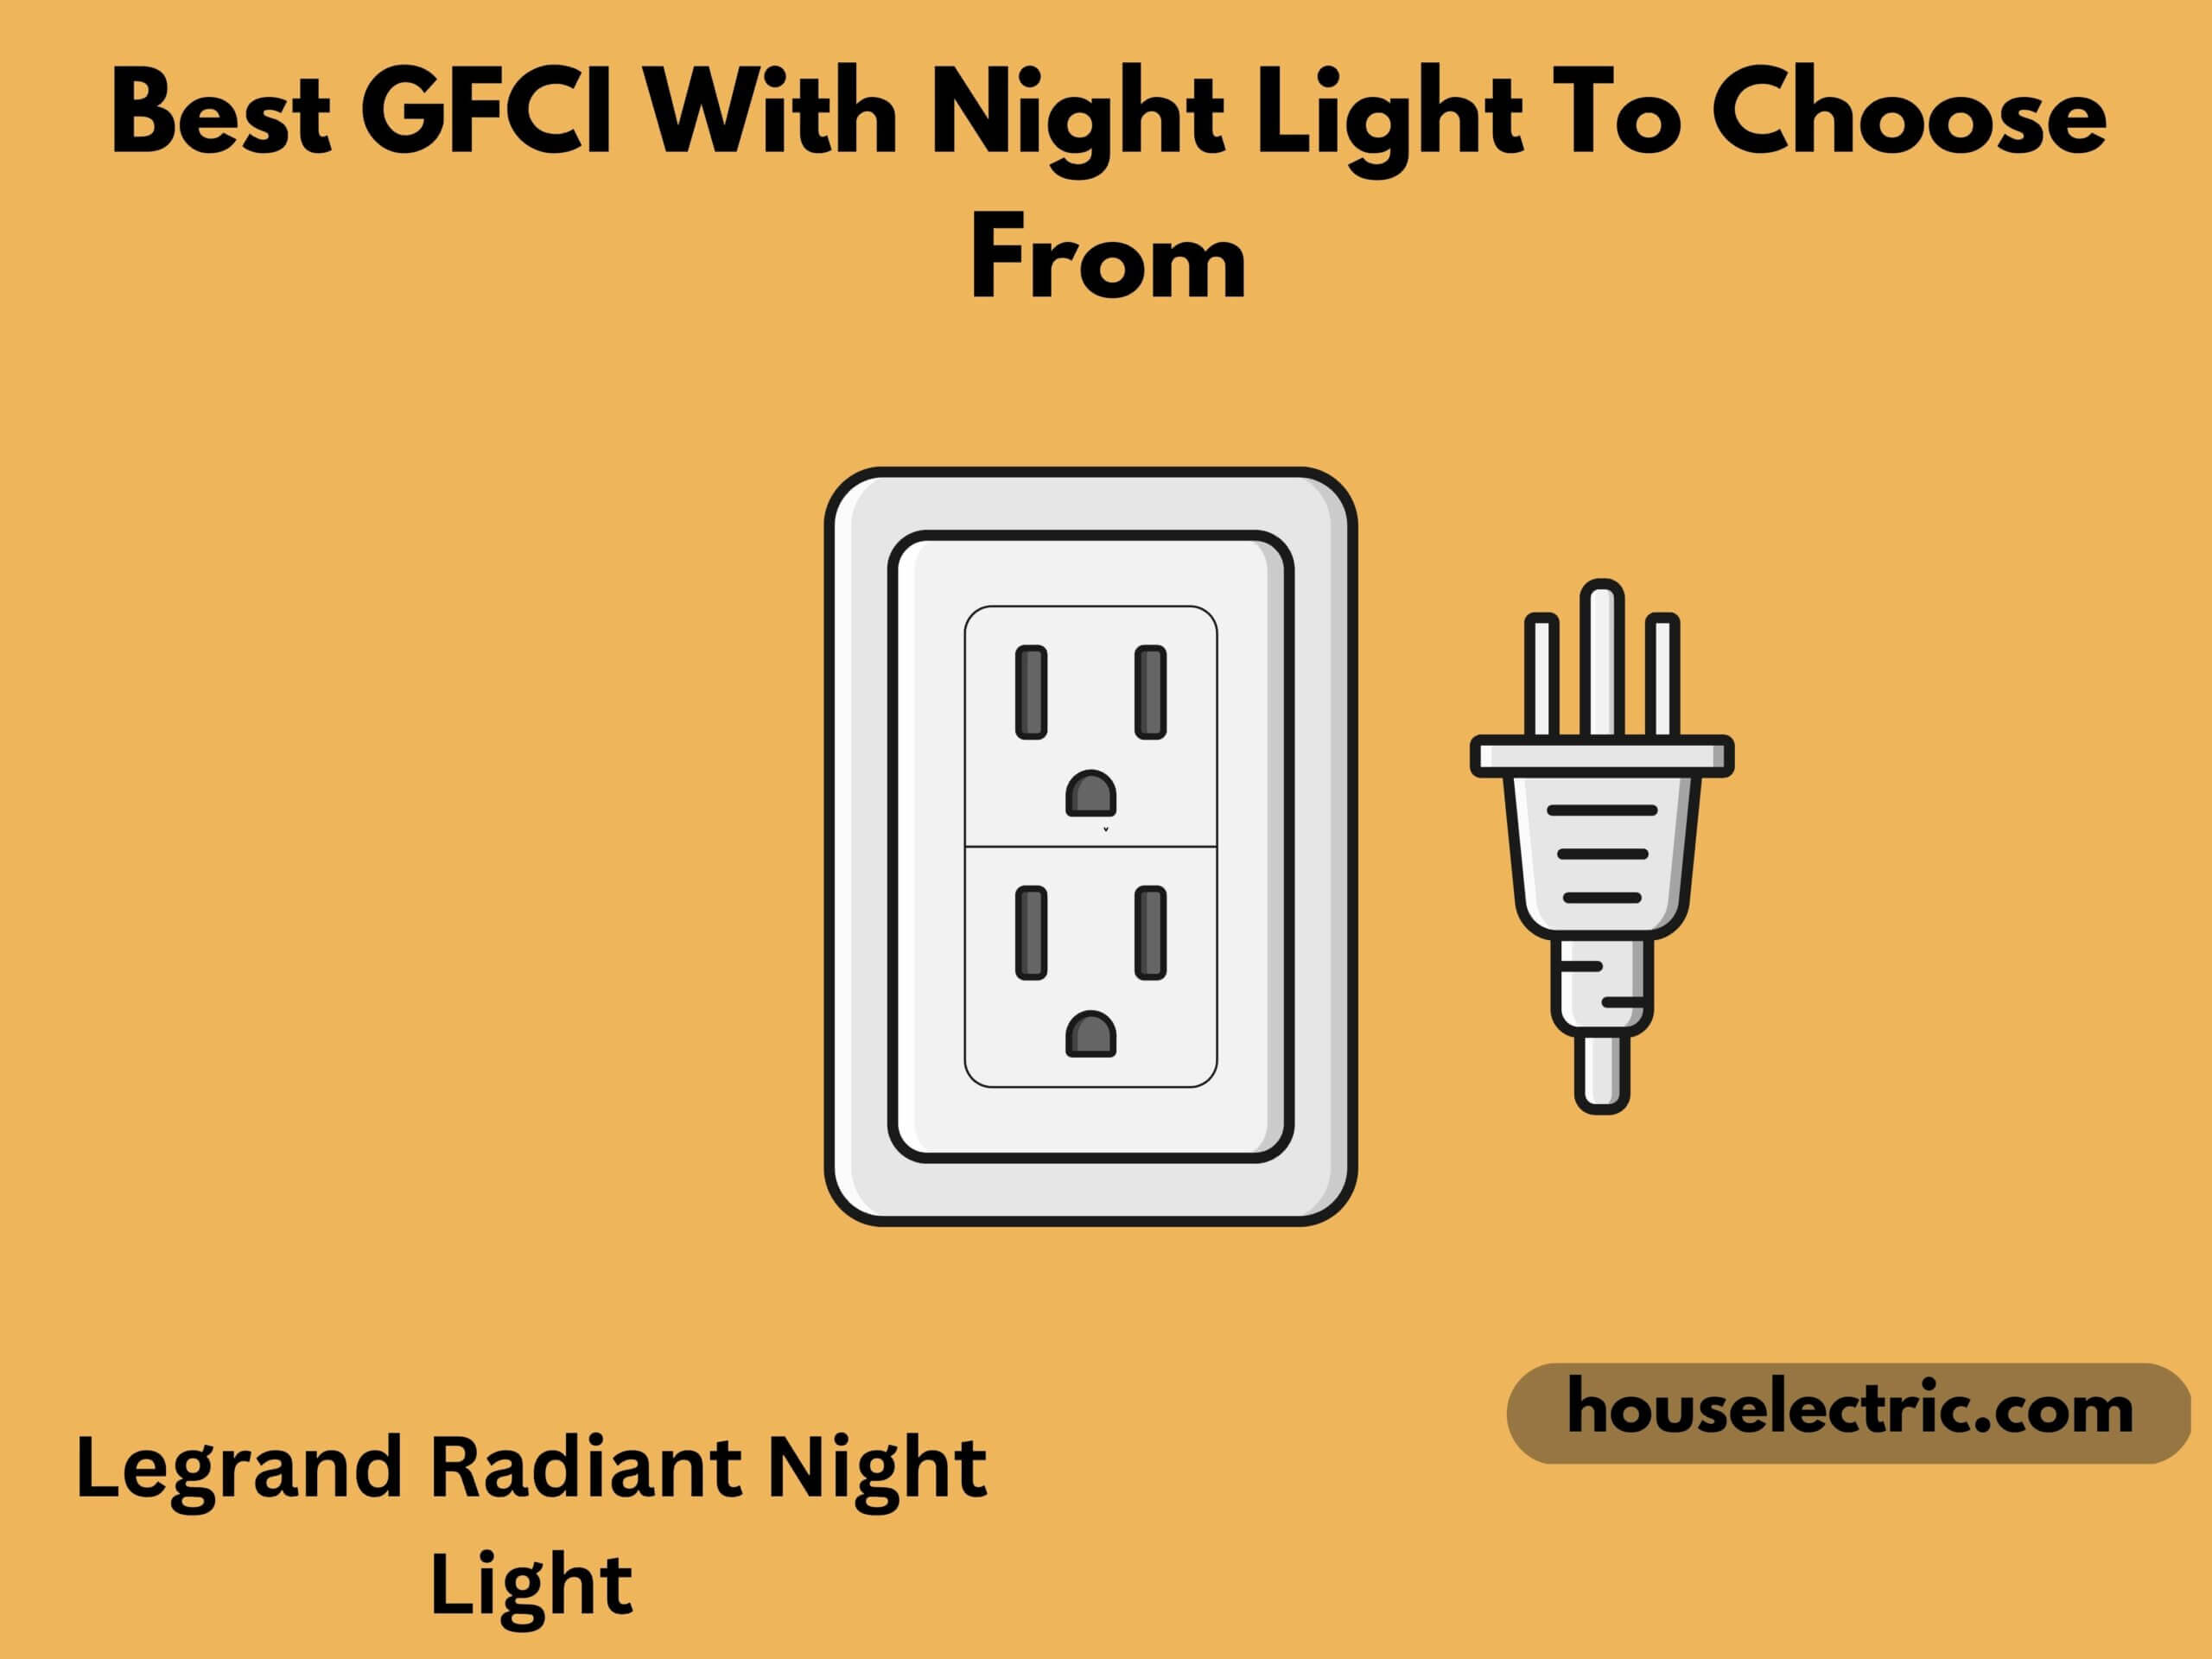 GFCI With Night Light